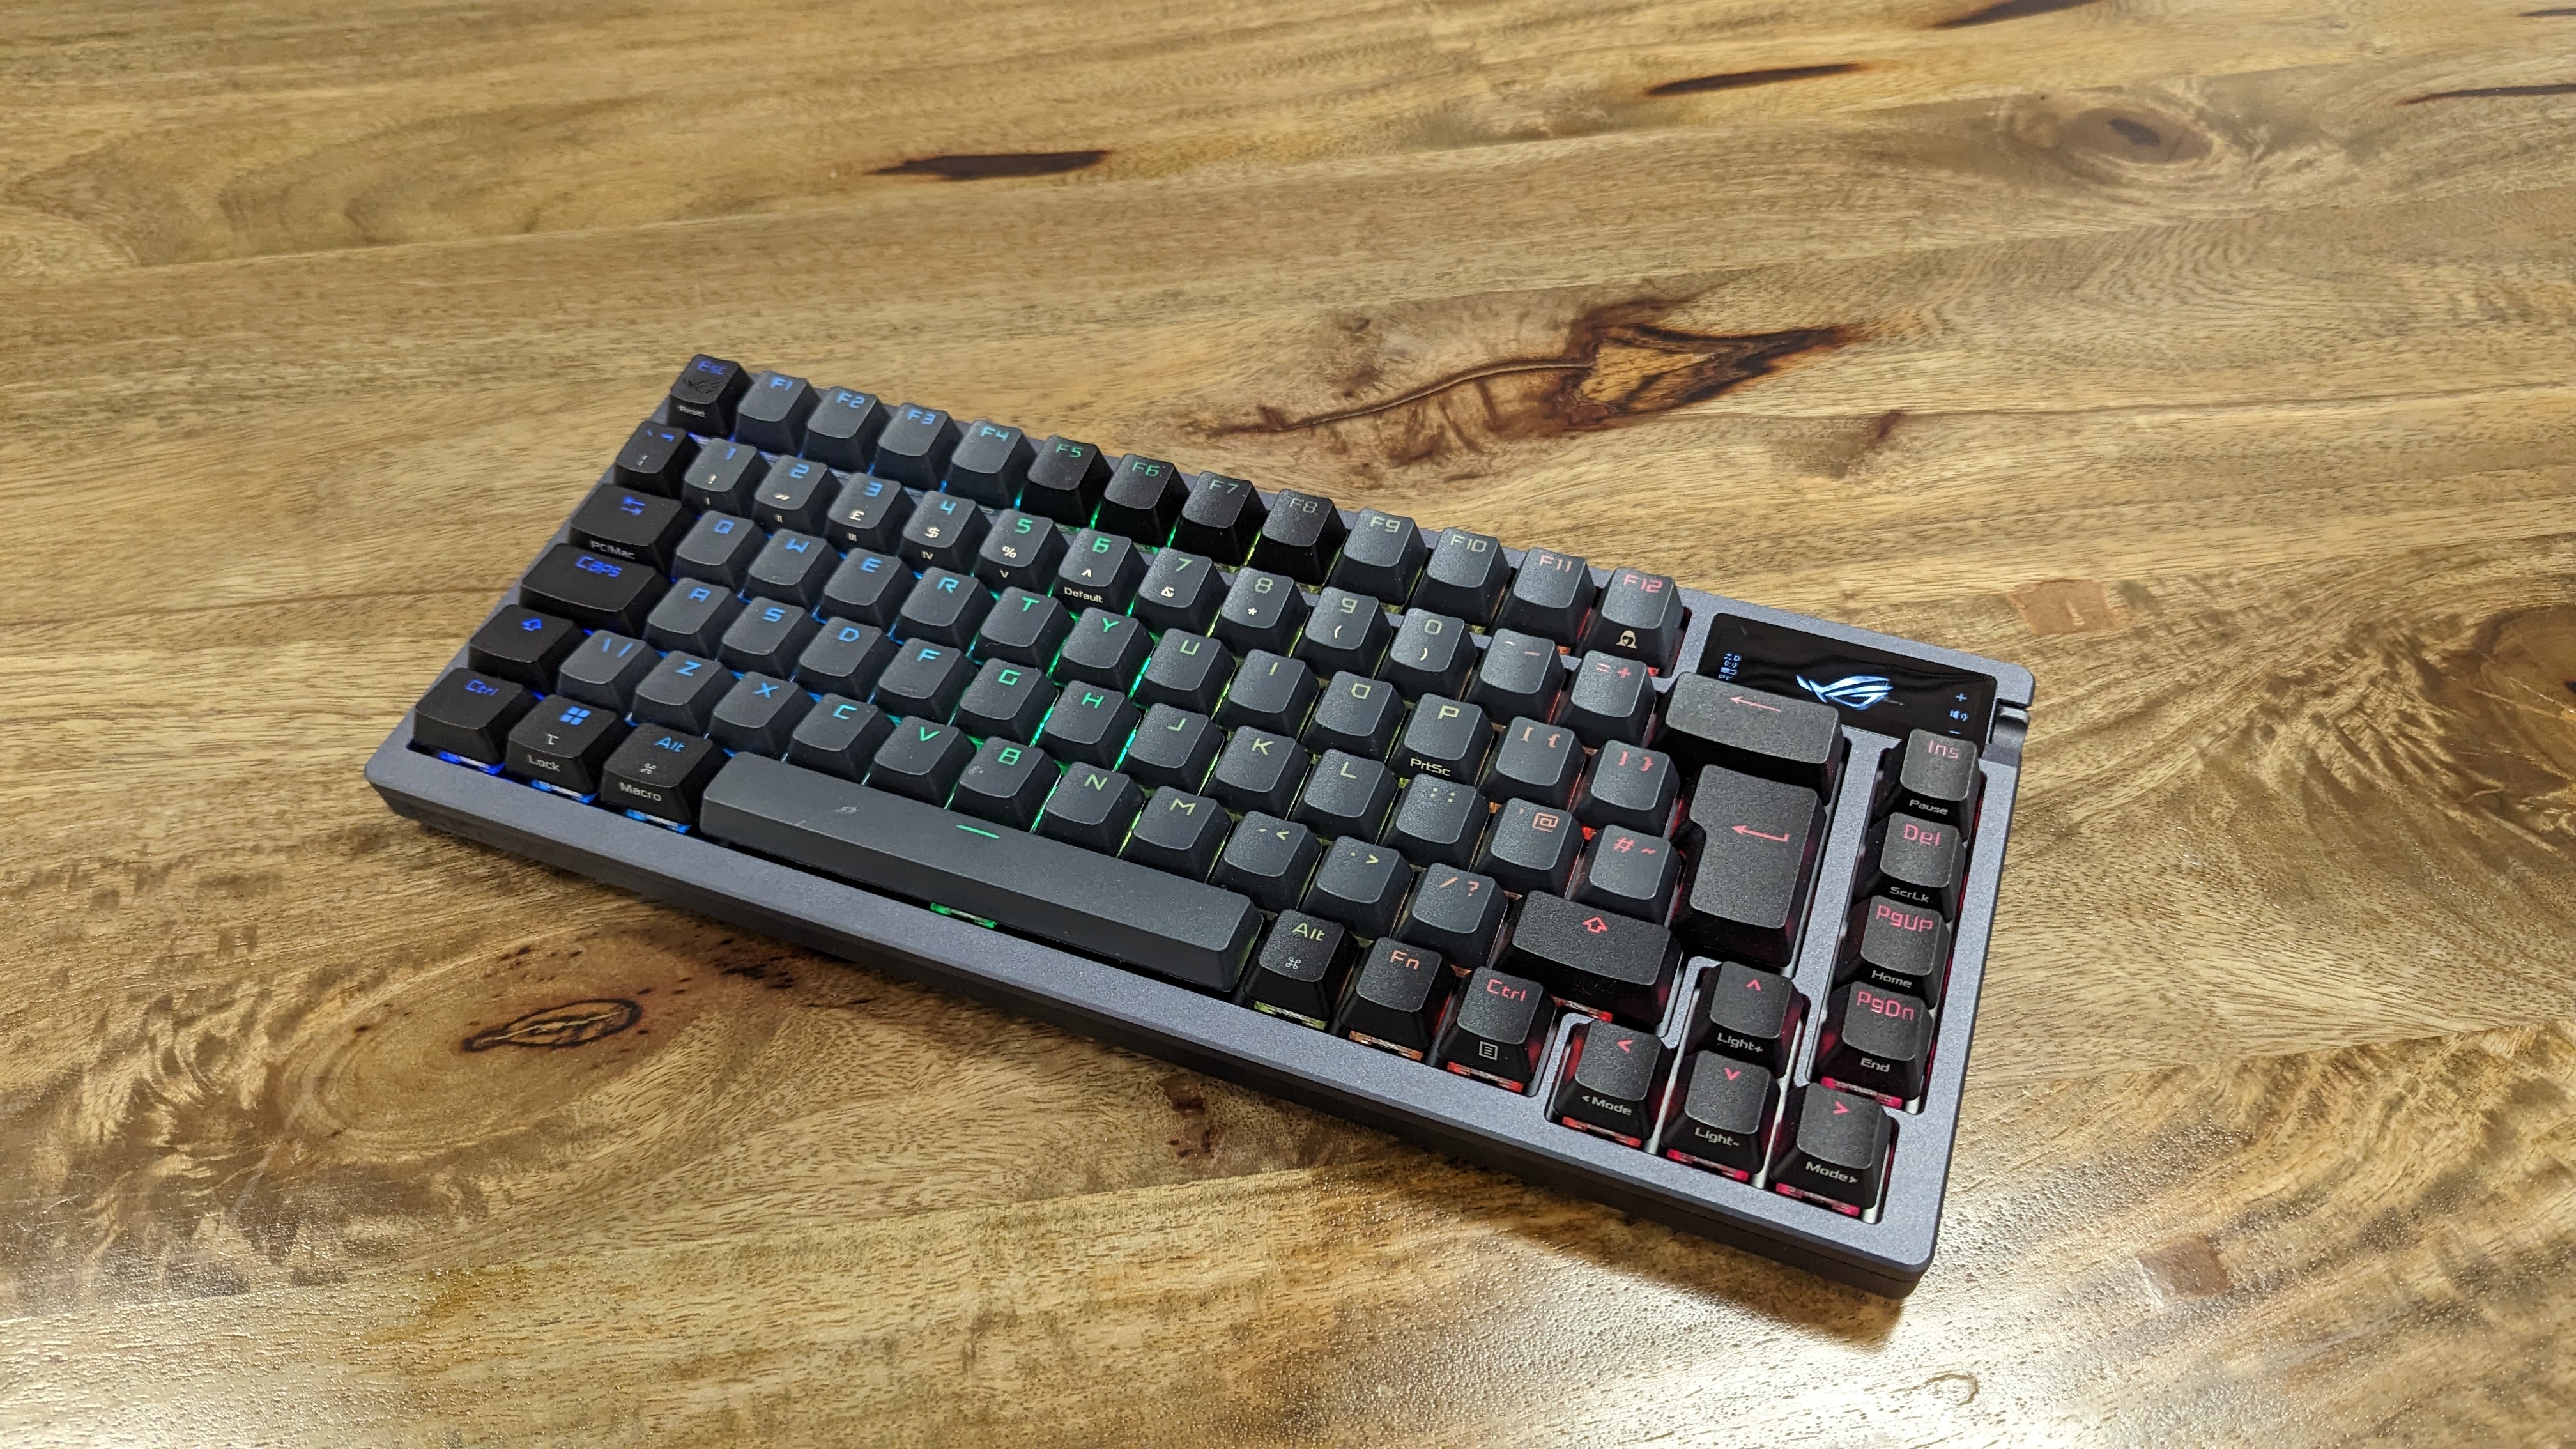 ASUS ROG Azoth review: Making this keyboard nerd happy